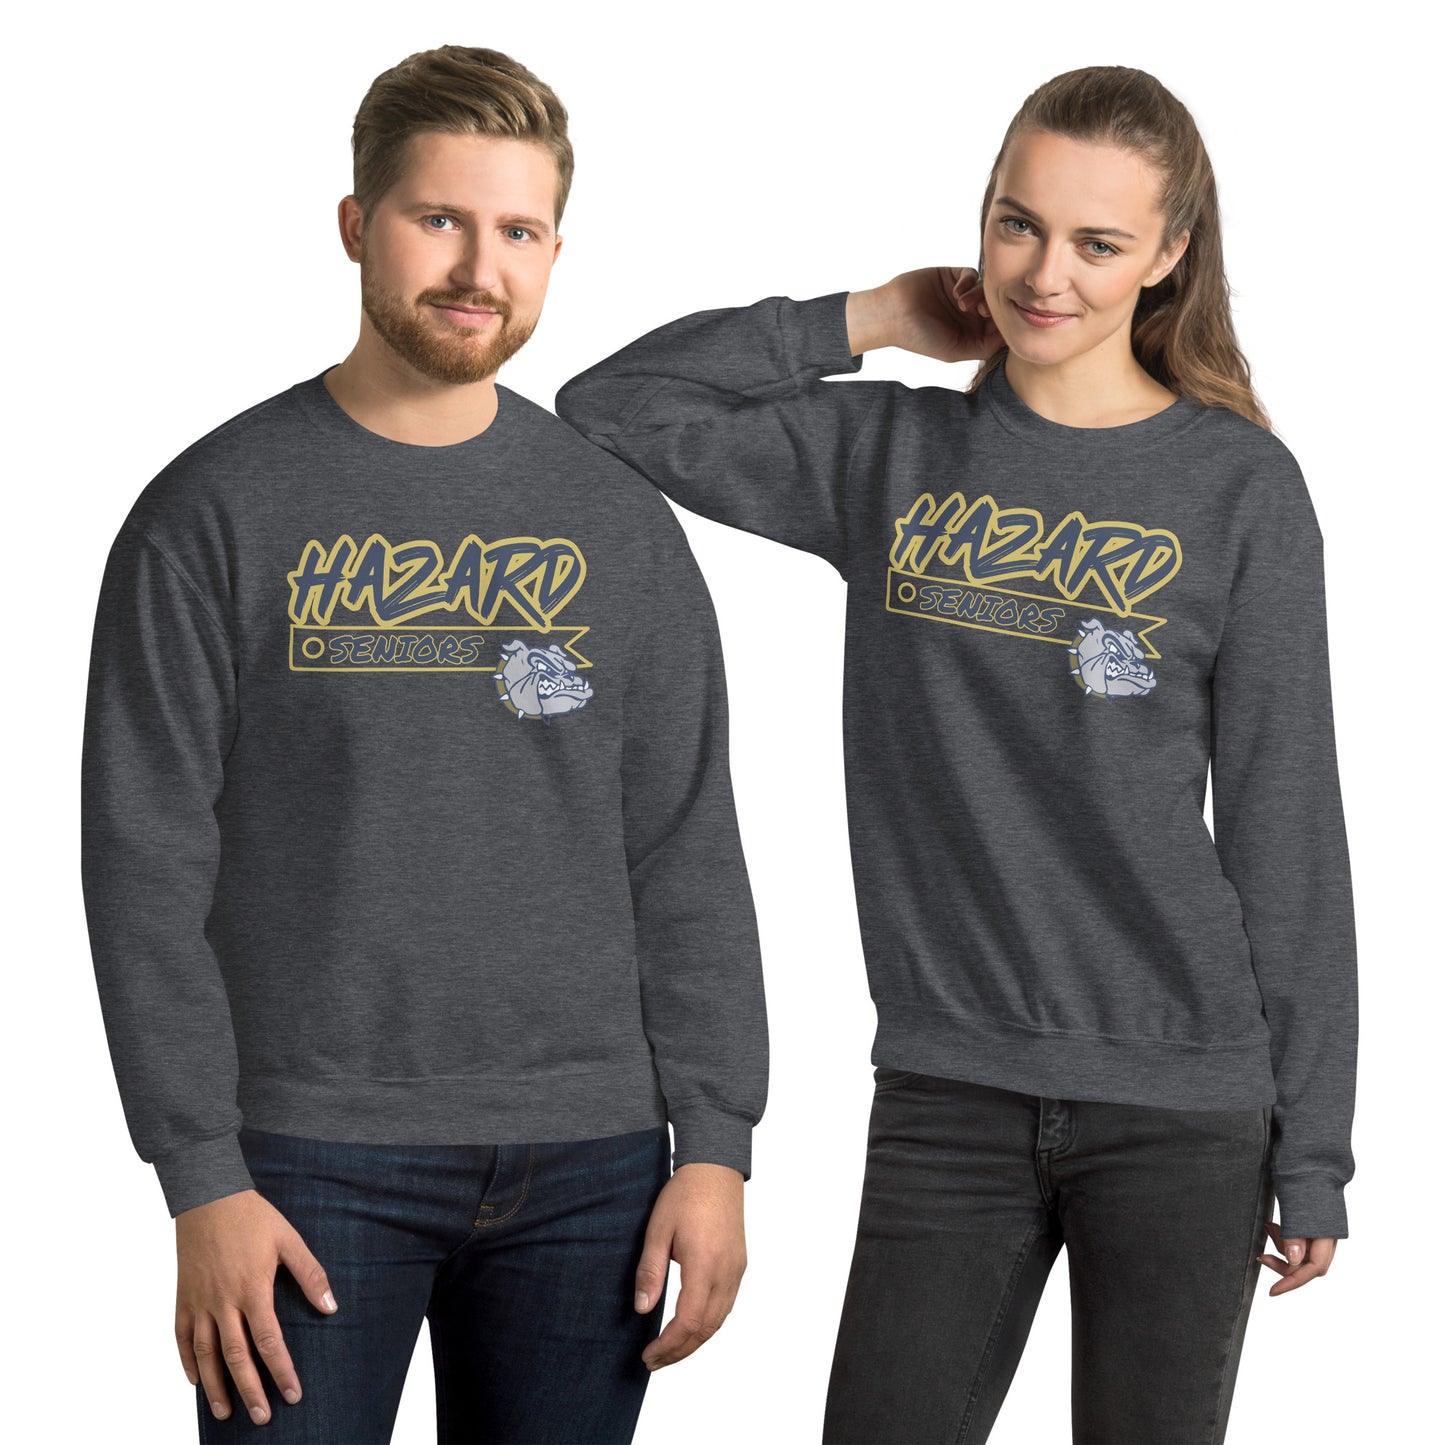 Personalized Crewneck Sweatshirt - Hazard High School